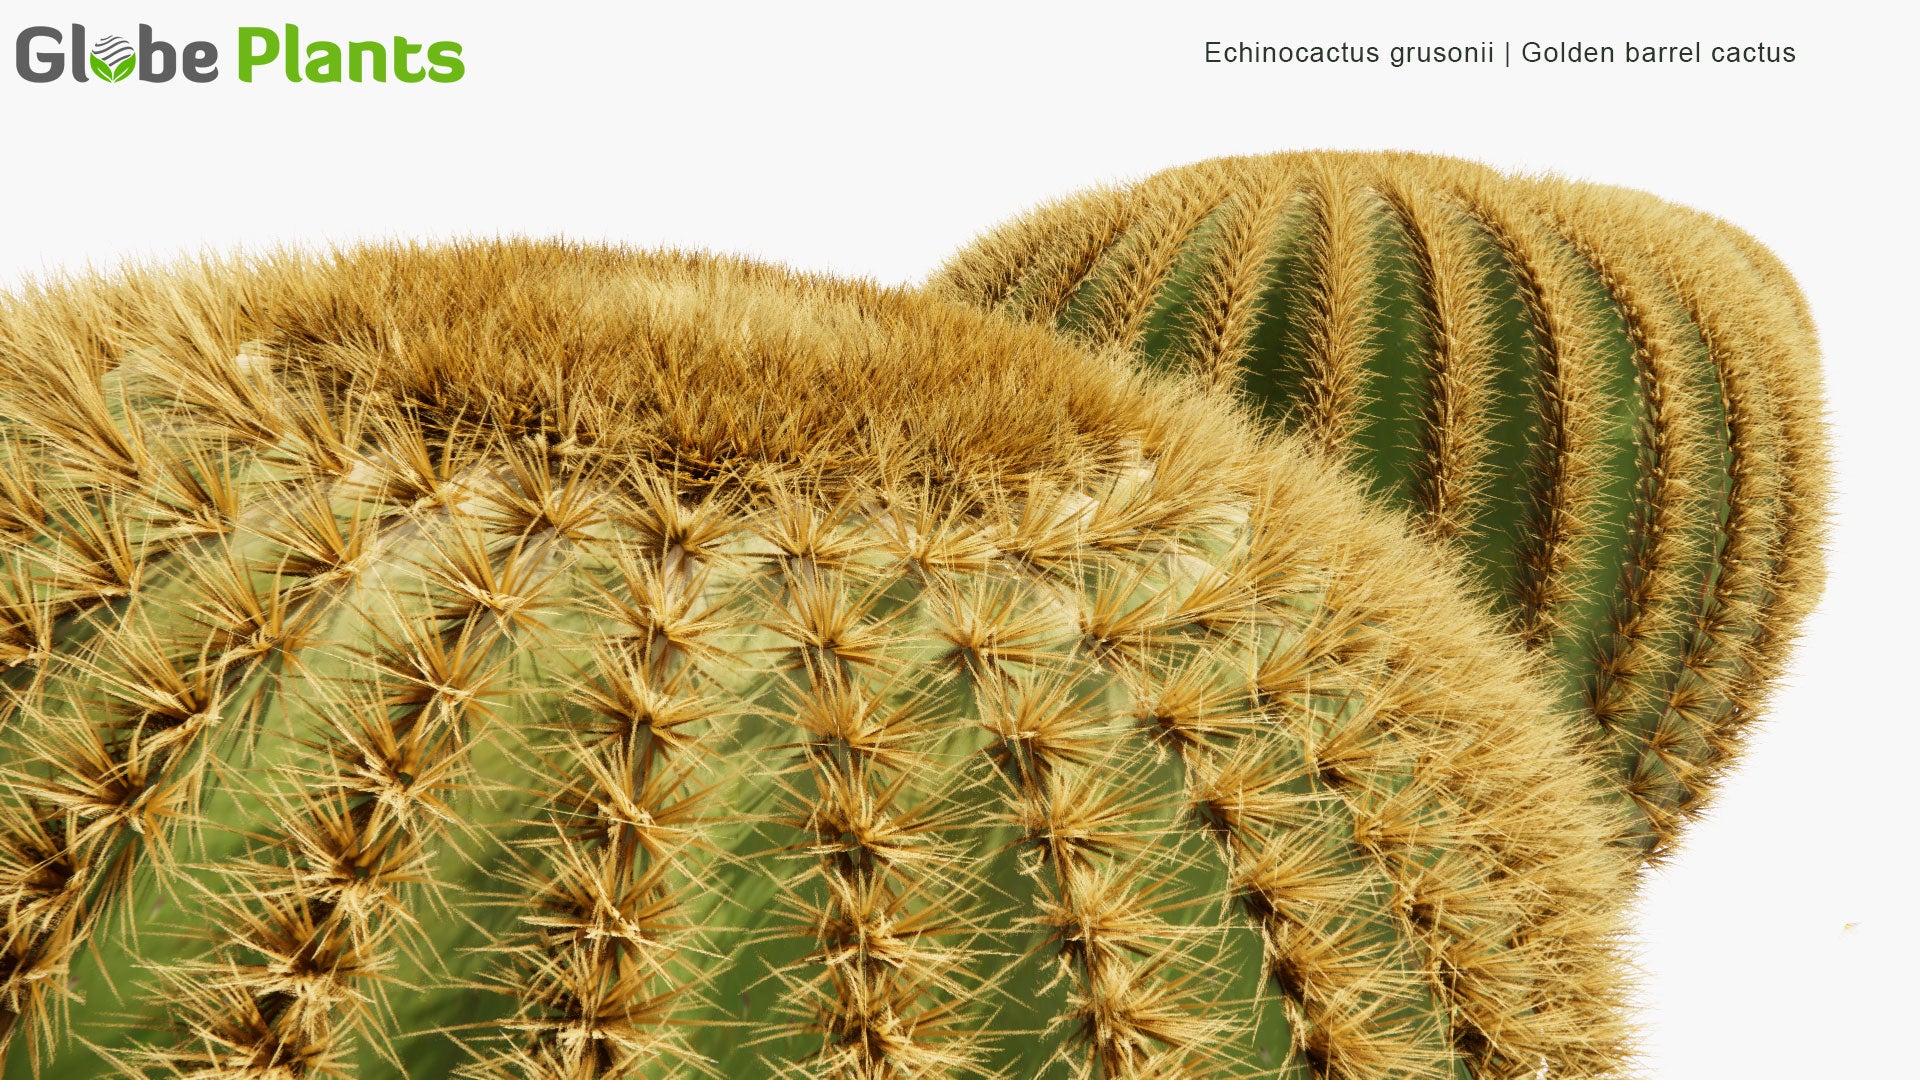 Low Poly Echinocactus Grusonii - Golden Barrel Cactus, Golden Ball, Mother-in-Law's Cushion (3D Model)